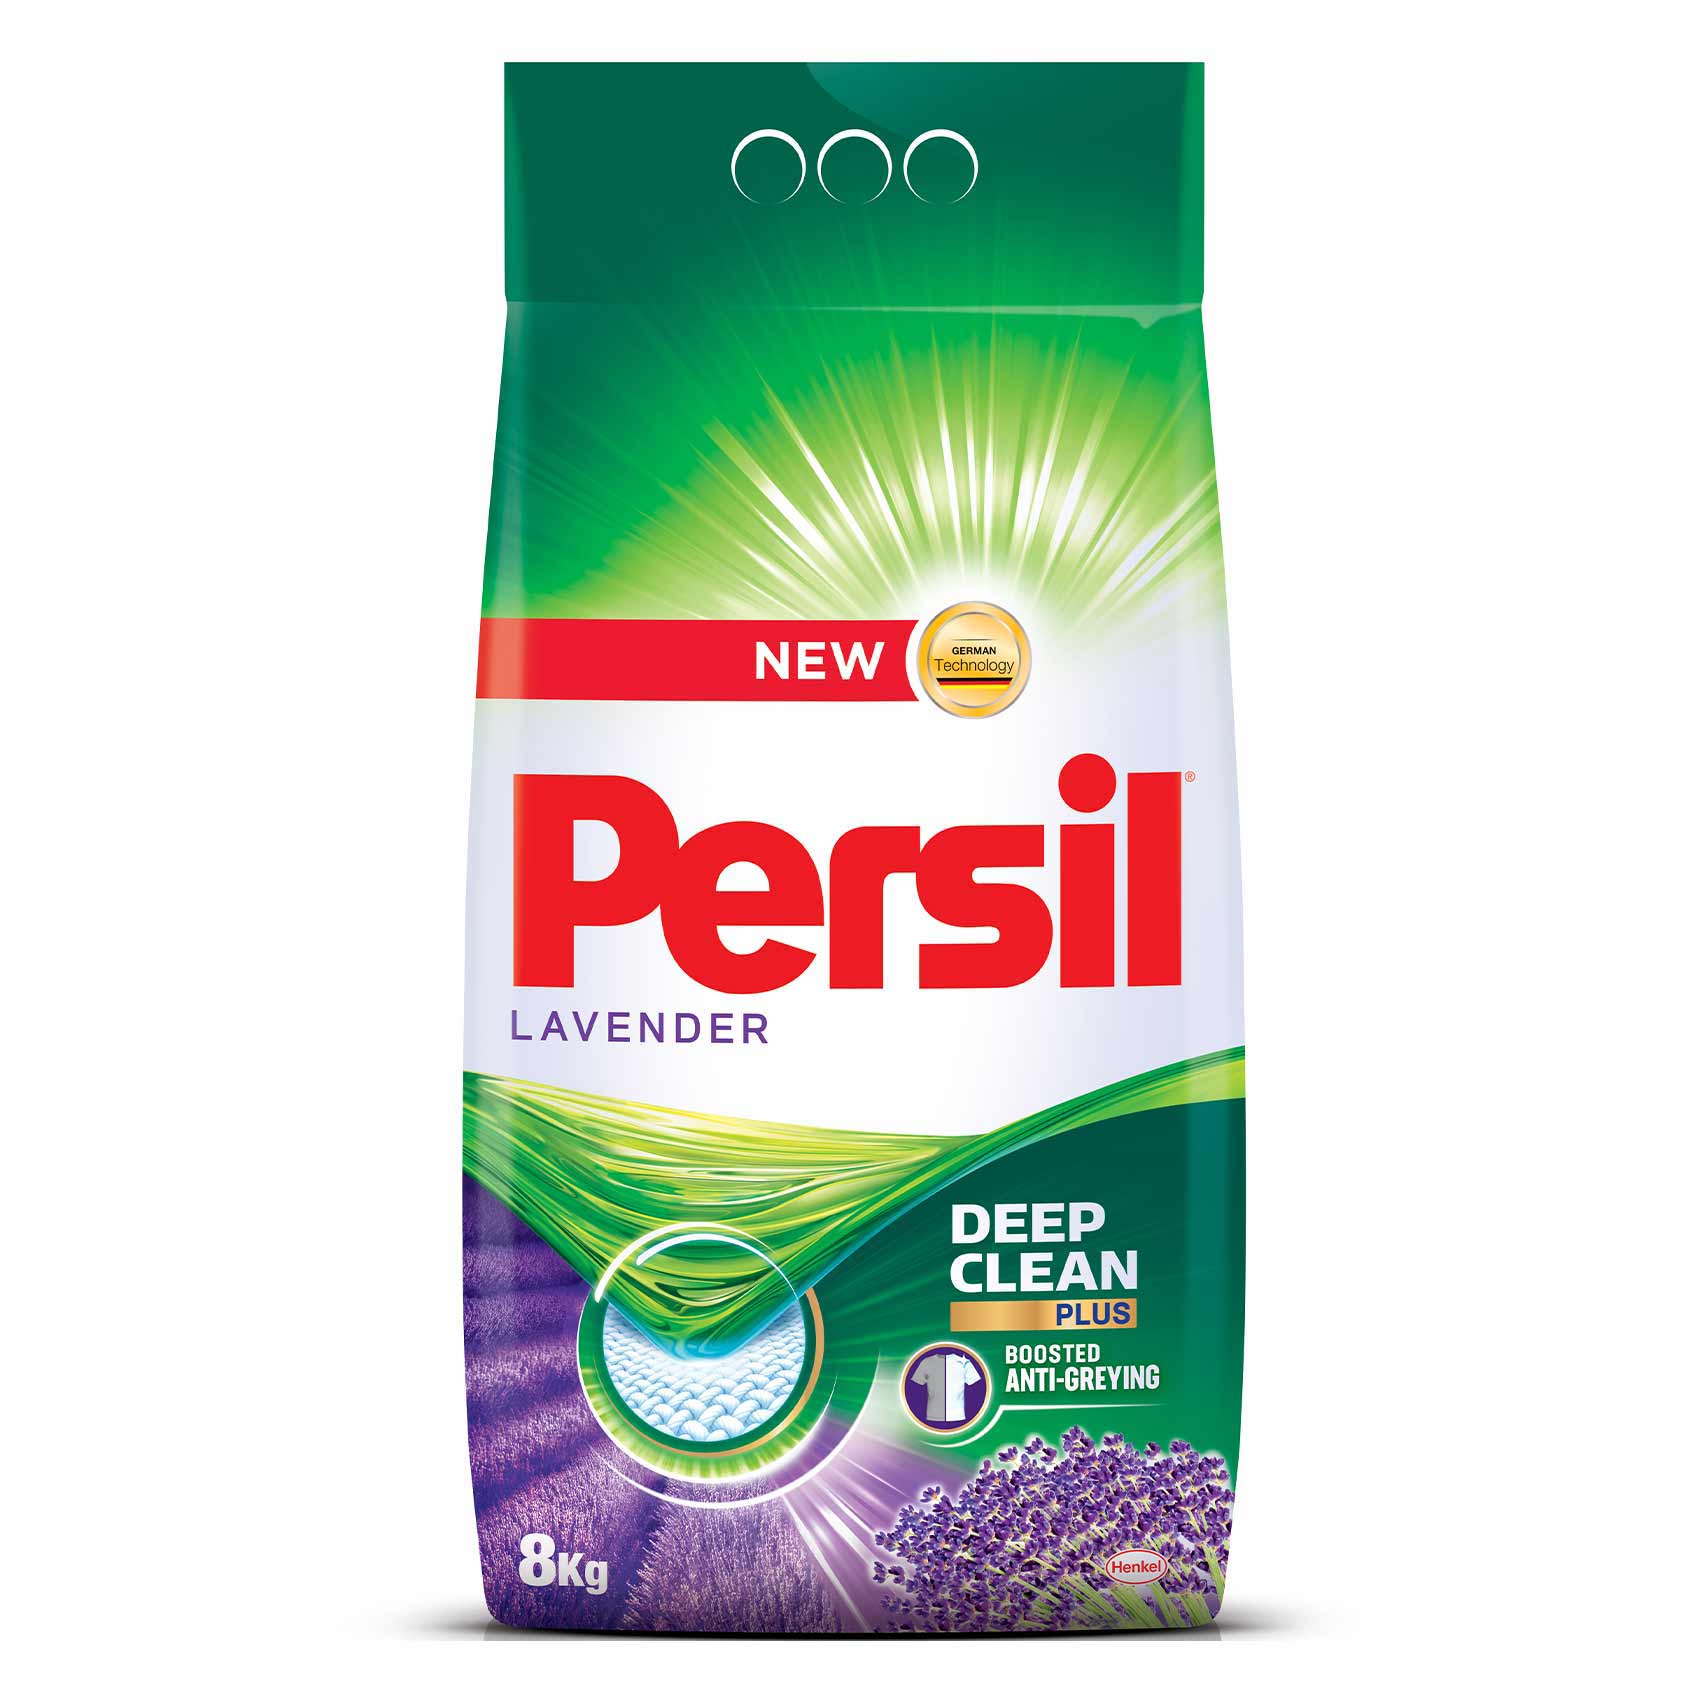 Persil Lavender Powder Laundry Detergent With Deep Clean Plus 8kg 